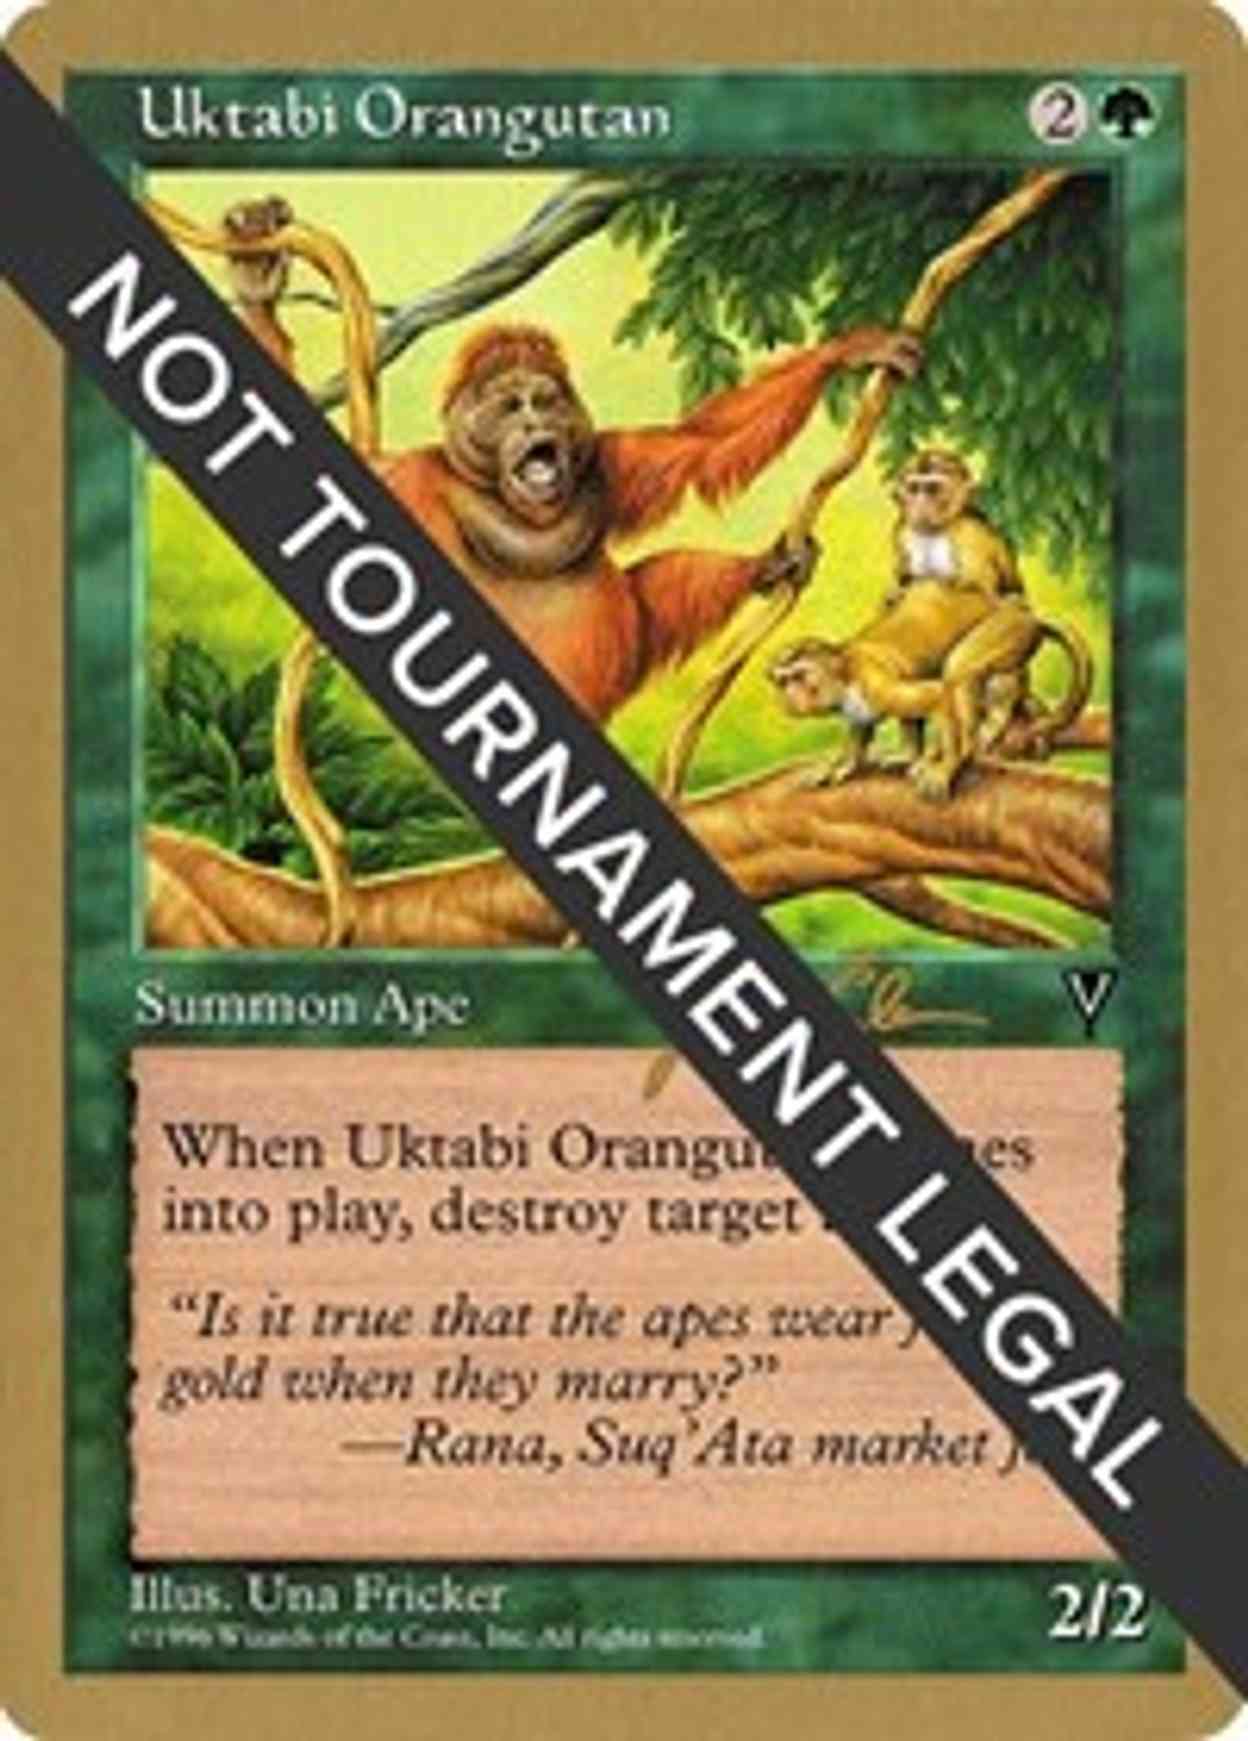 Uktabi Orangutan - 1997 Jakub Slemr (VIS) magic card front